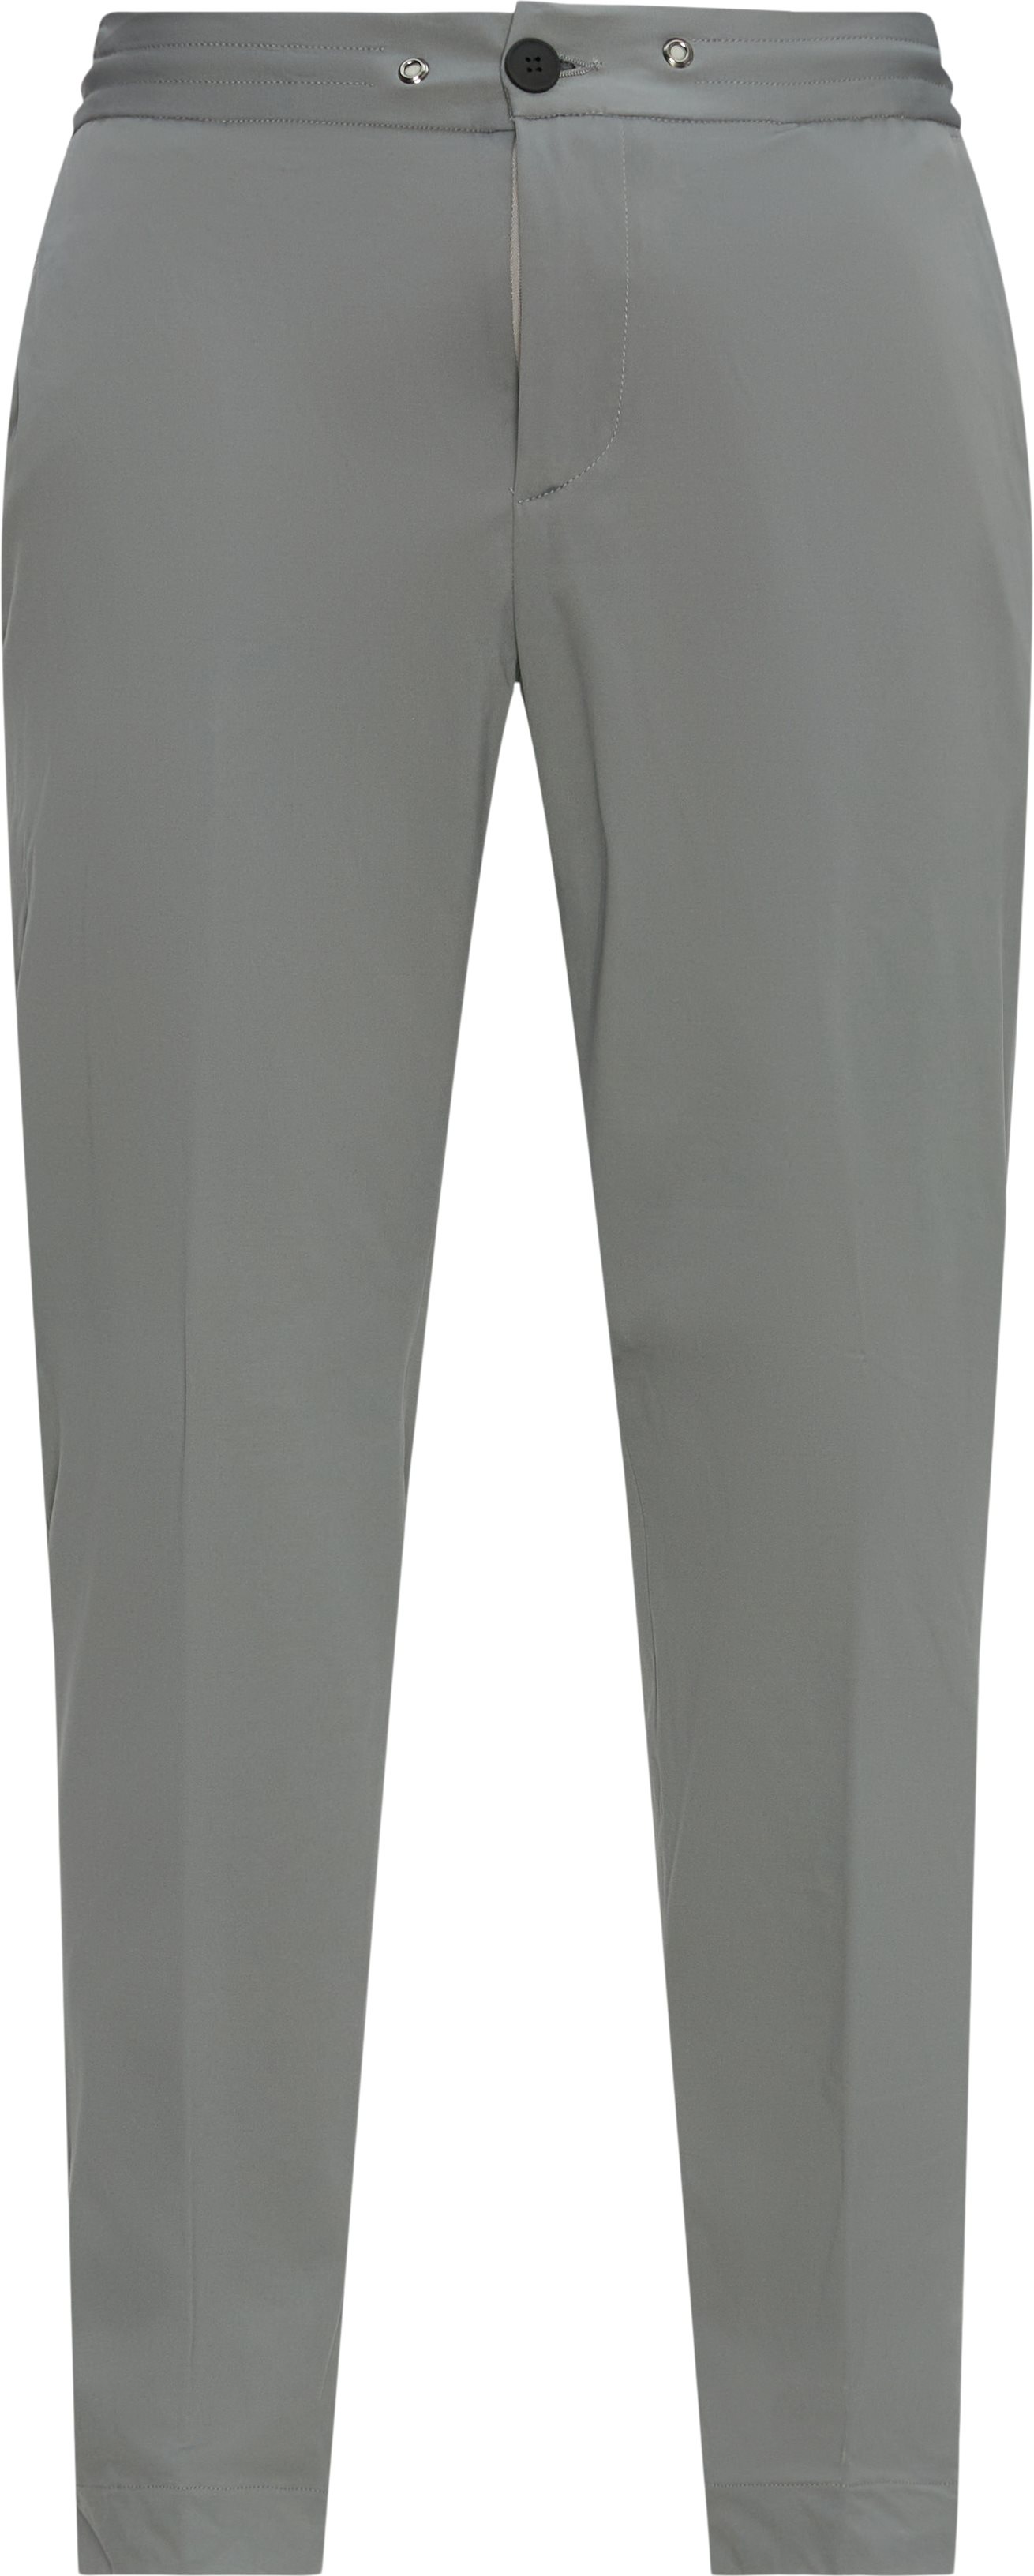 Tombolini Trousers PL30 EYAP 24 Grey